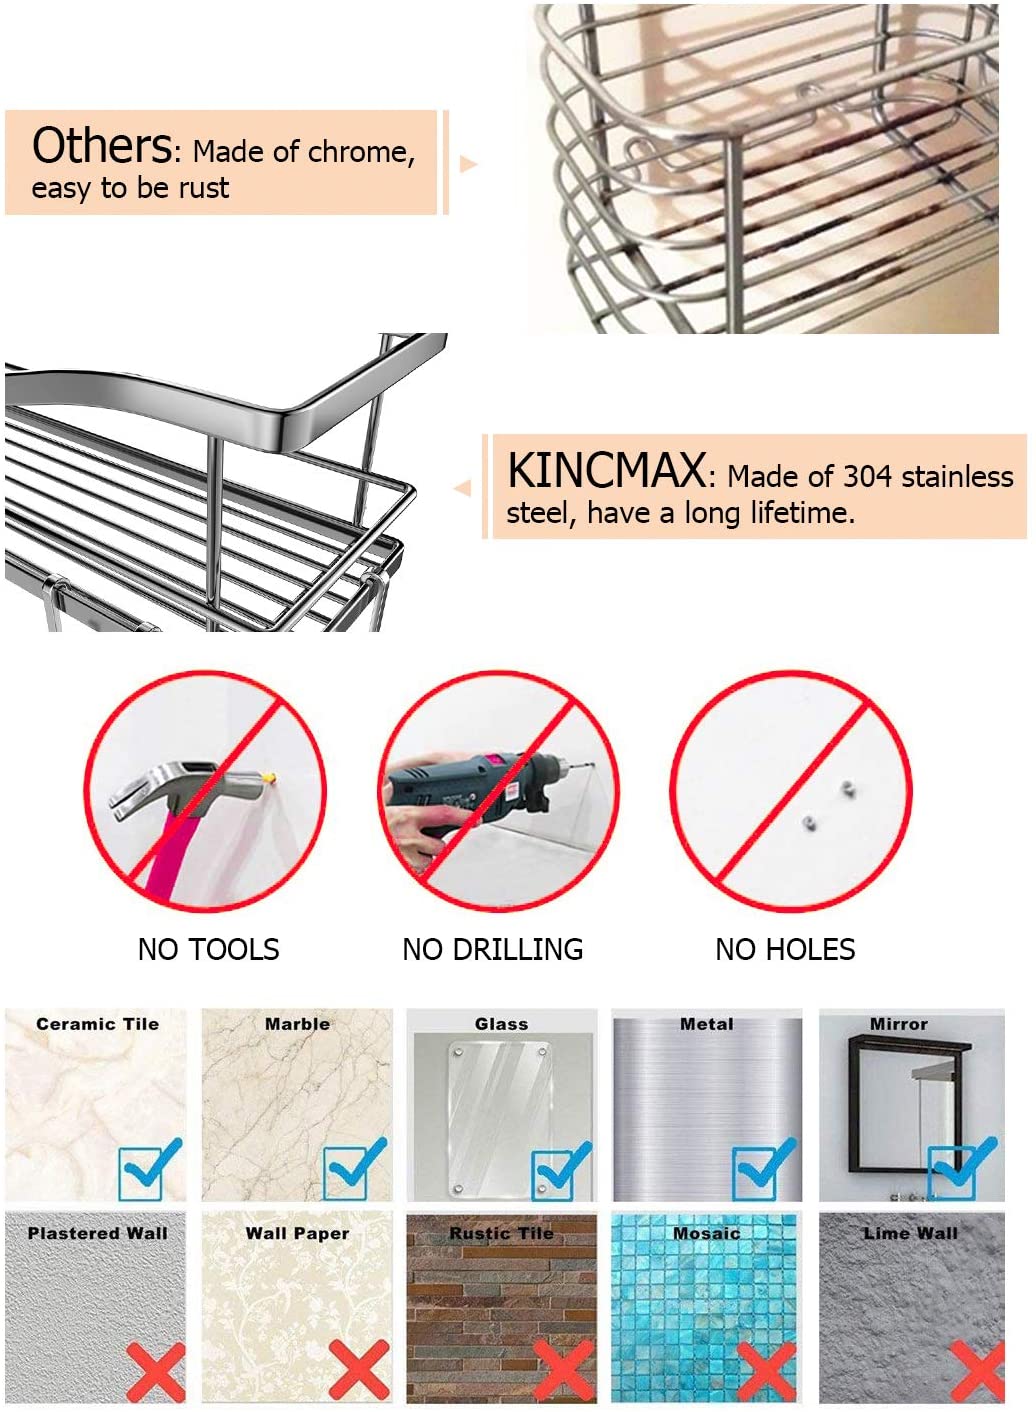  KINCMAX Shower Caddies (2 Pack), Rustproof Stainless